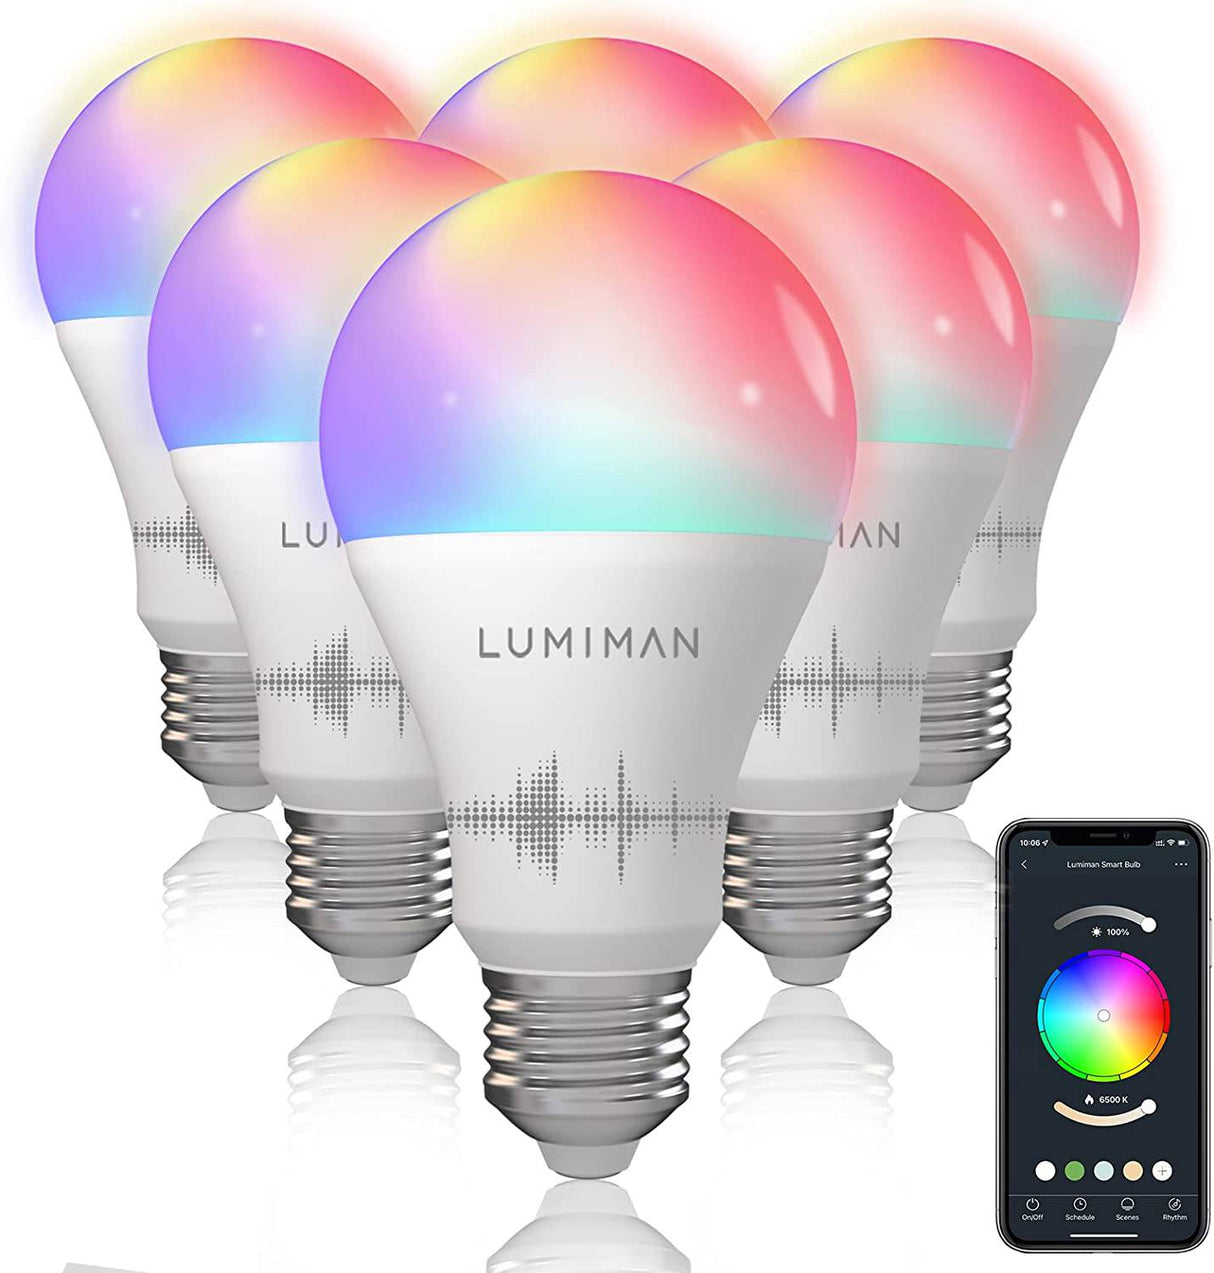 Bombilla LED RGB+Cálida  Bombillas de colores LED